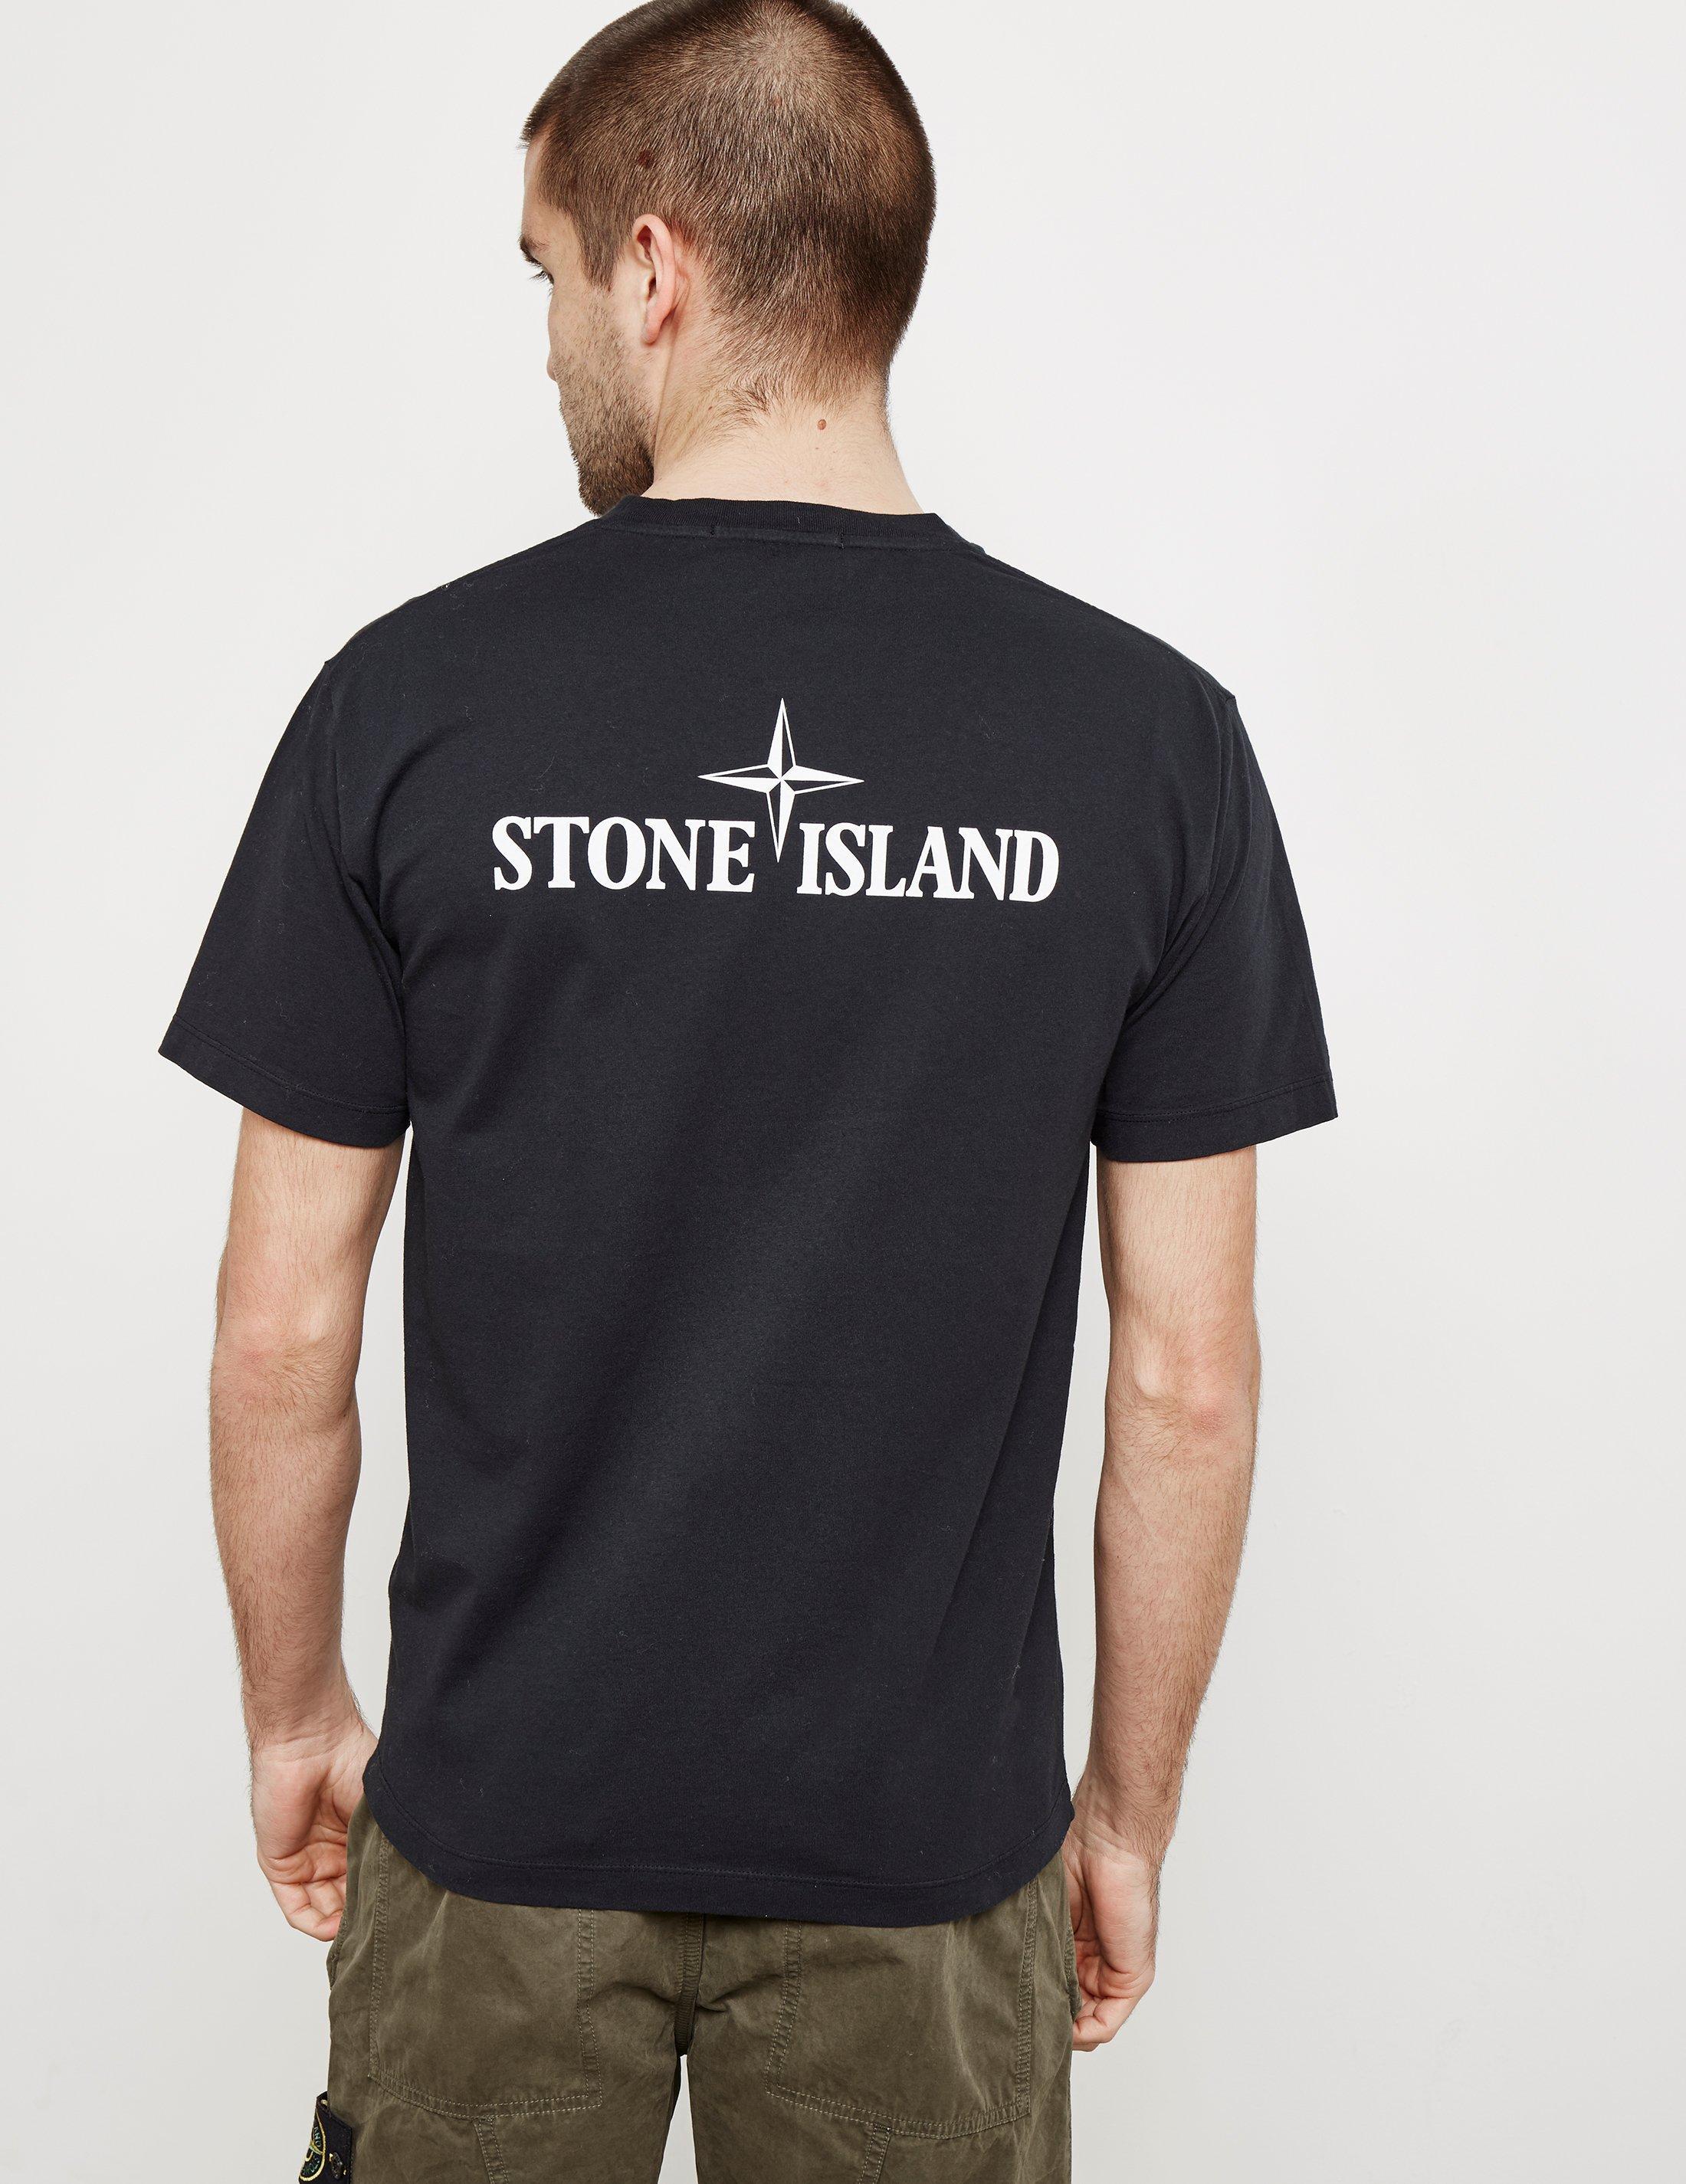 Stone Island Mens Back Print Short Sleeve T-shirt Black for Men - Lyst